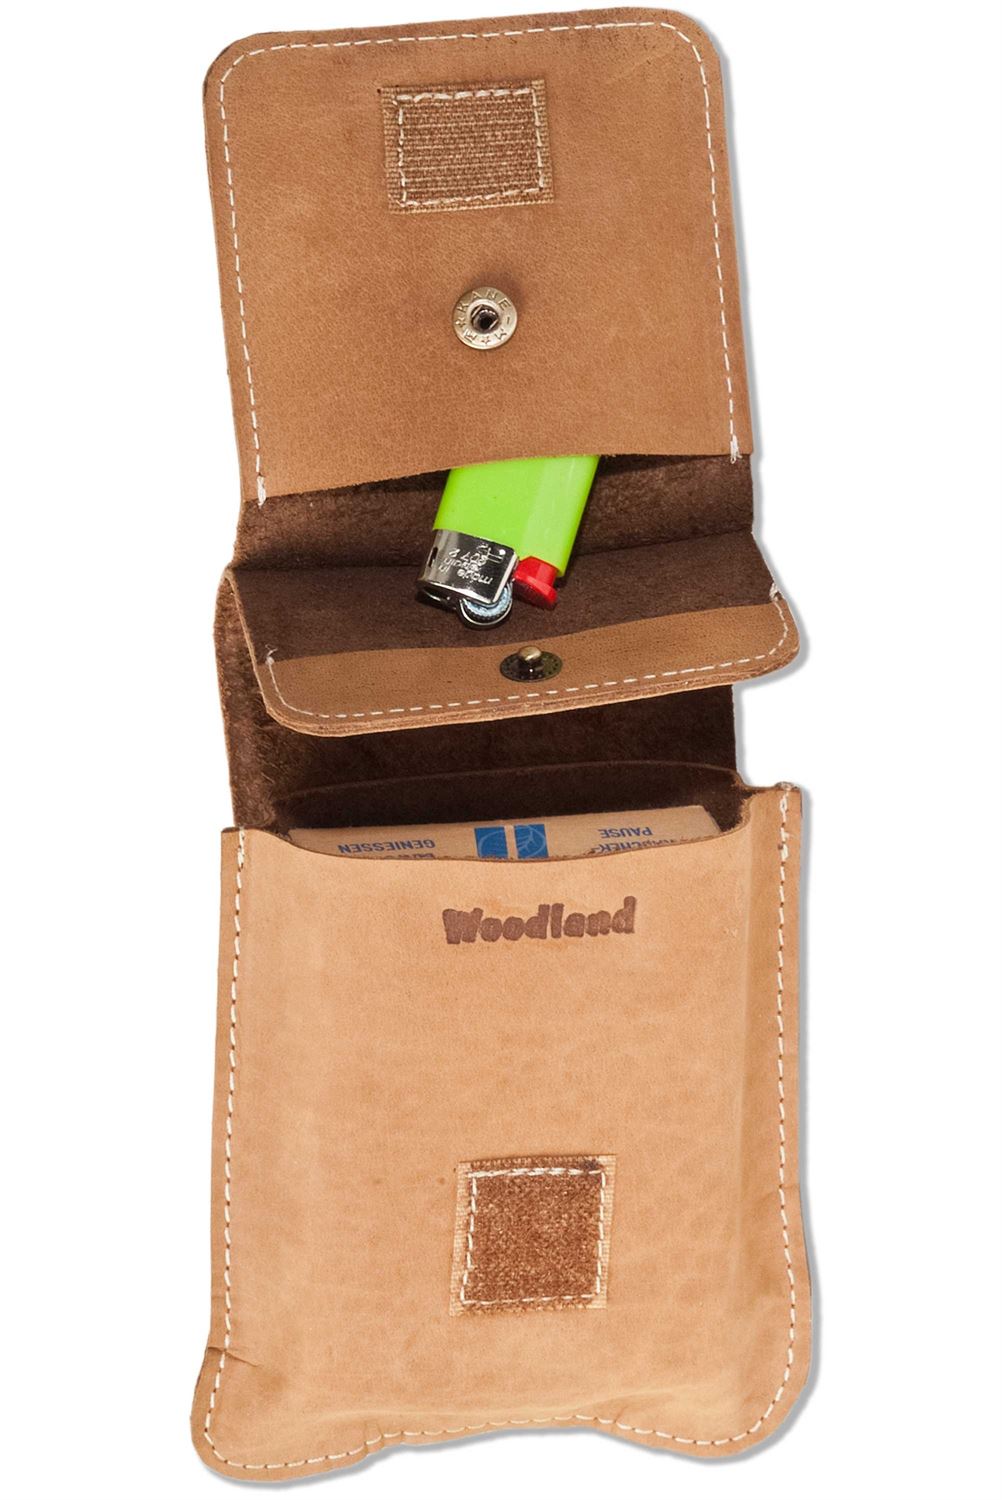 Woodland® Zigaretteneschachtel-Etui für große Schachteln aus naturbelassenem Büffelleder in Cognac